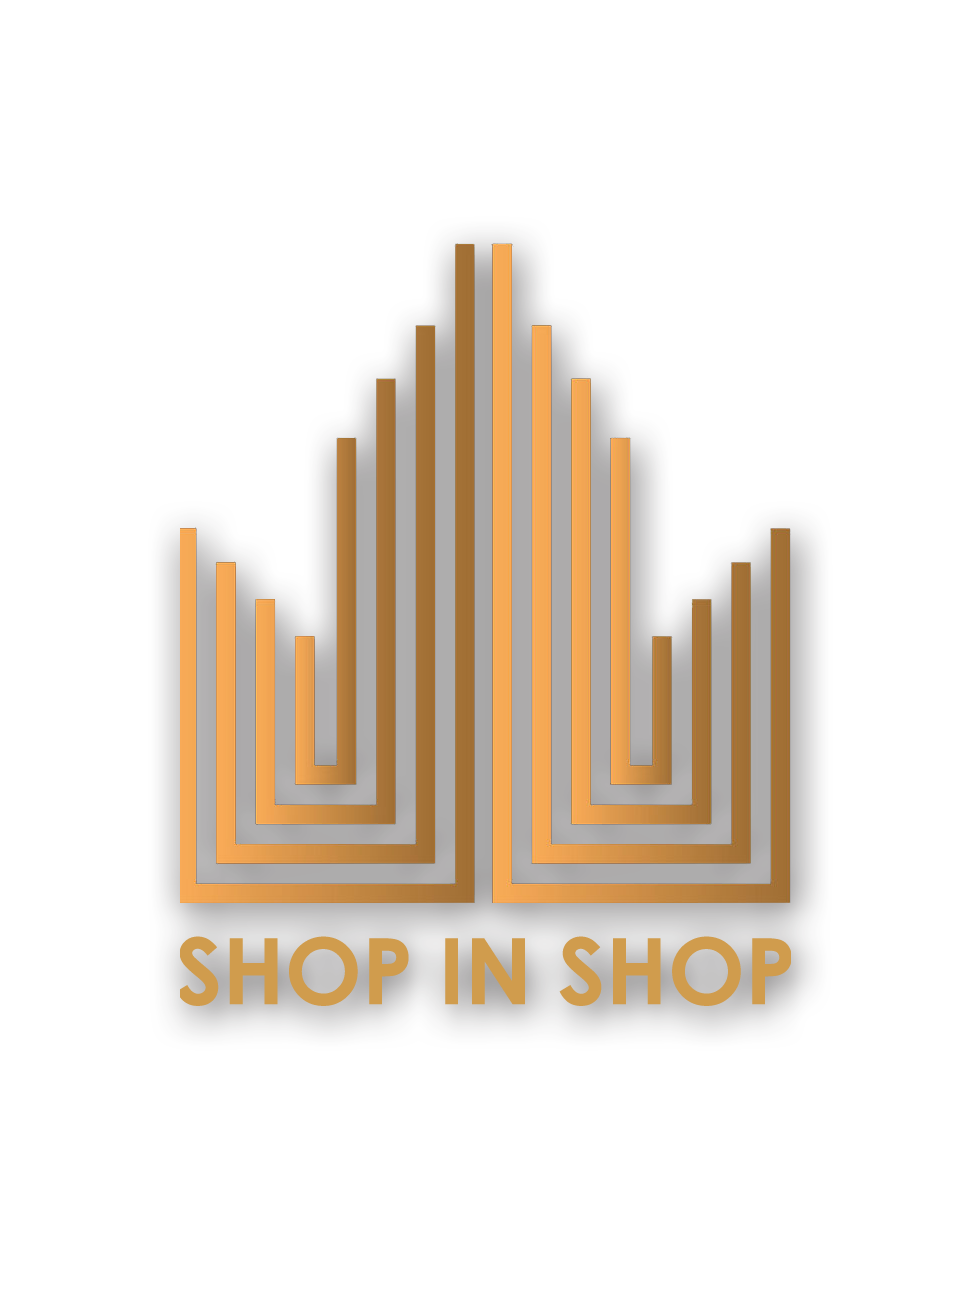 ShopinShop